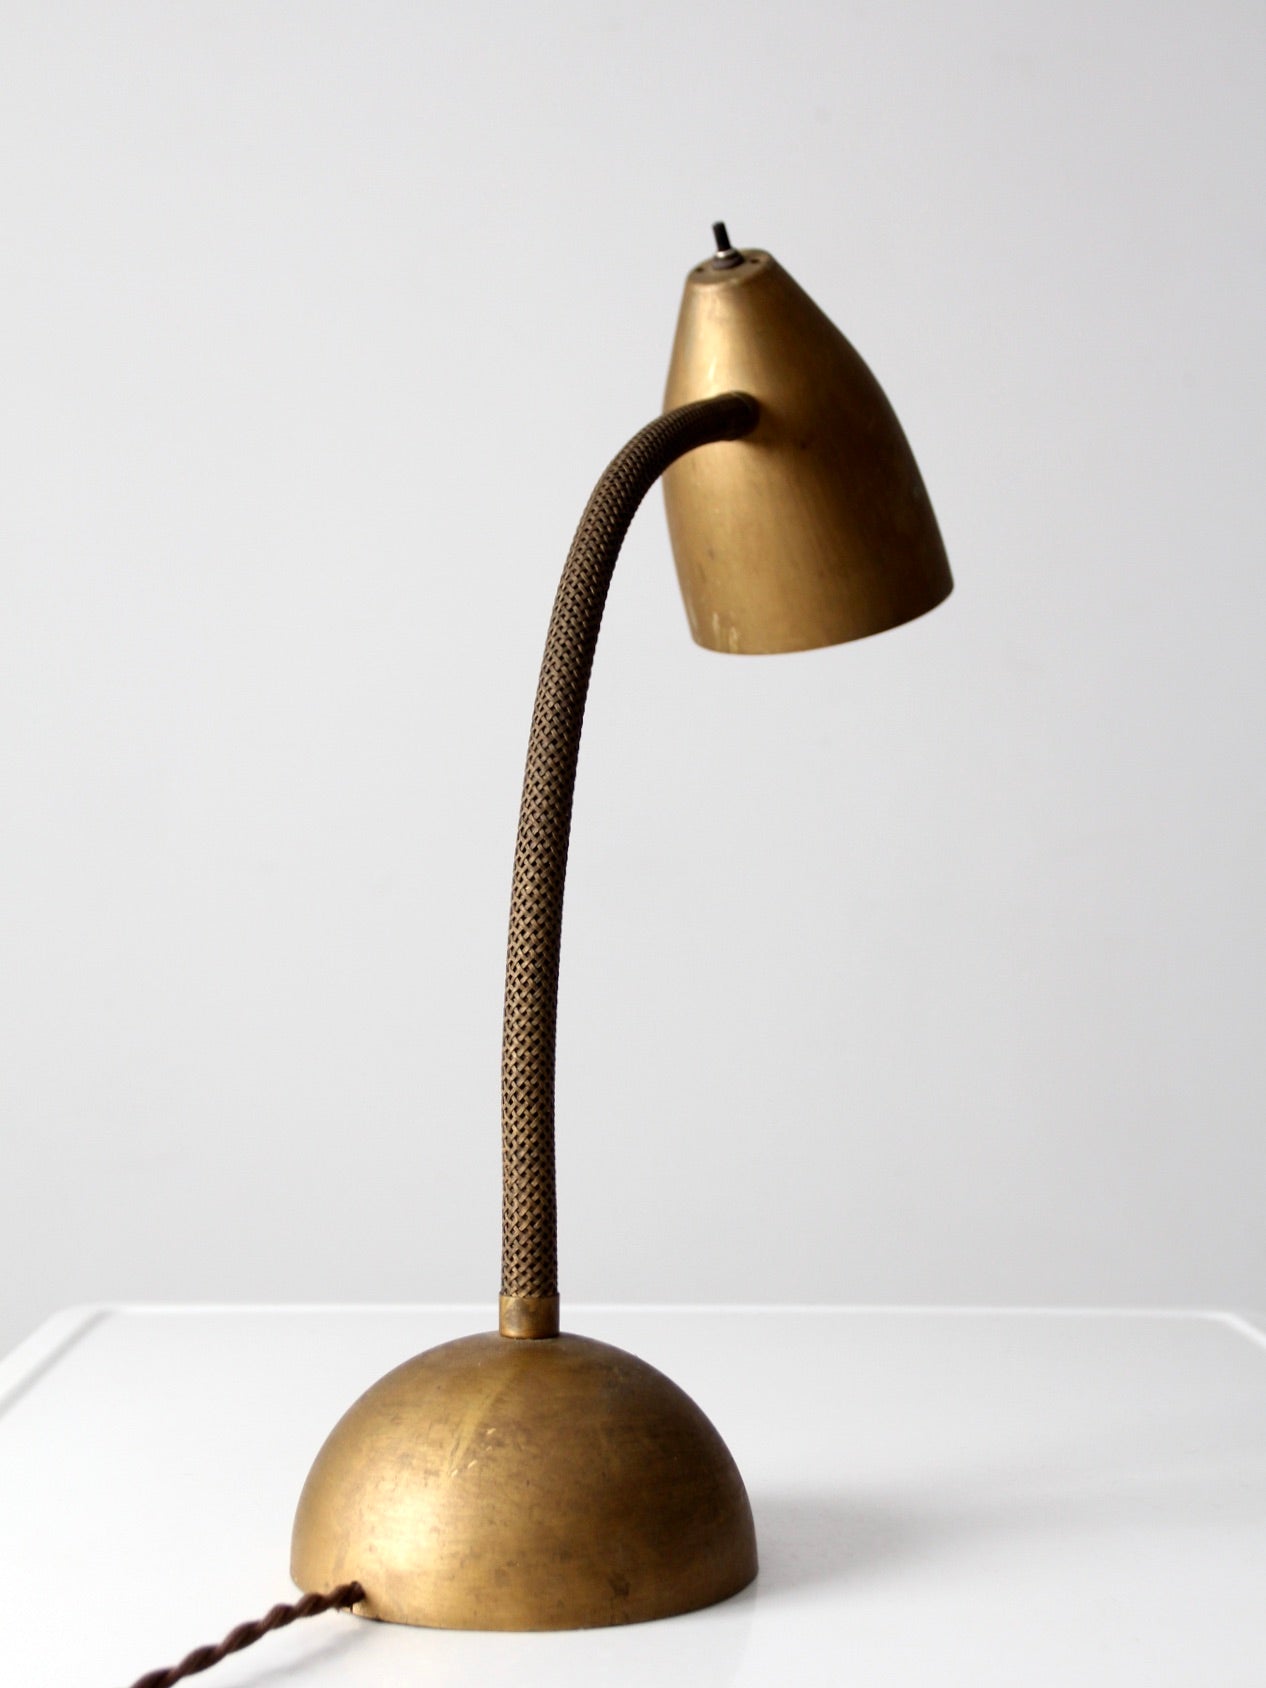 mid-century gooseneck table lamp